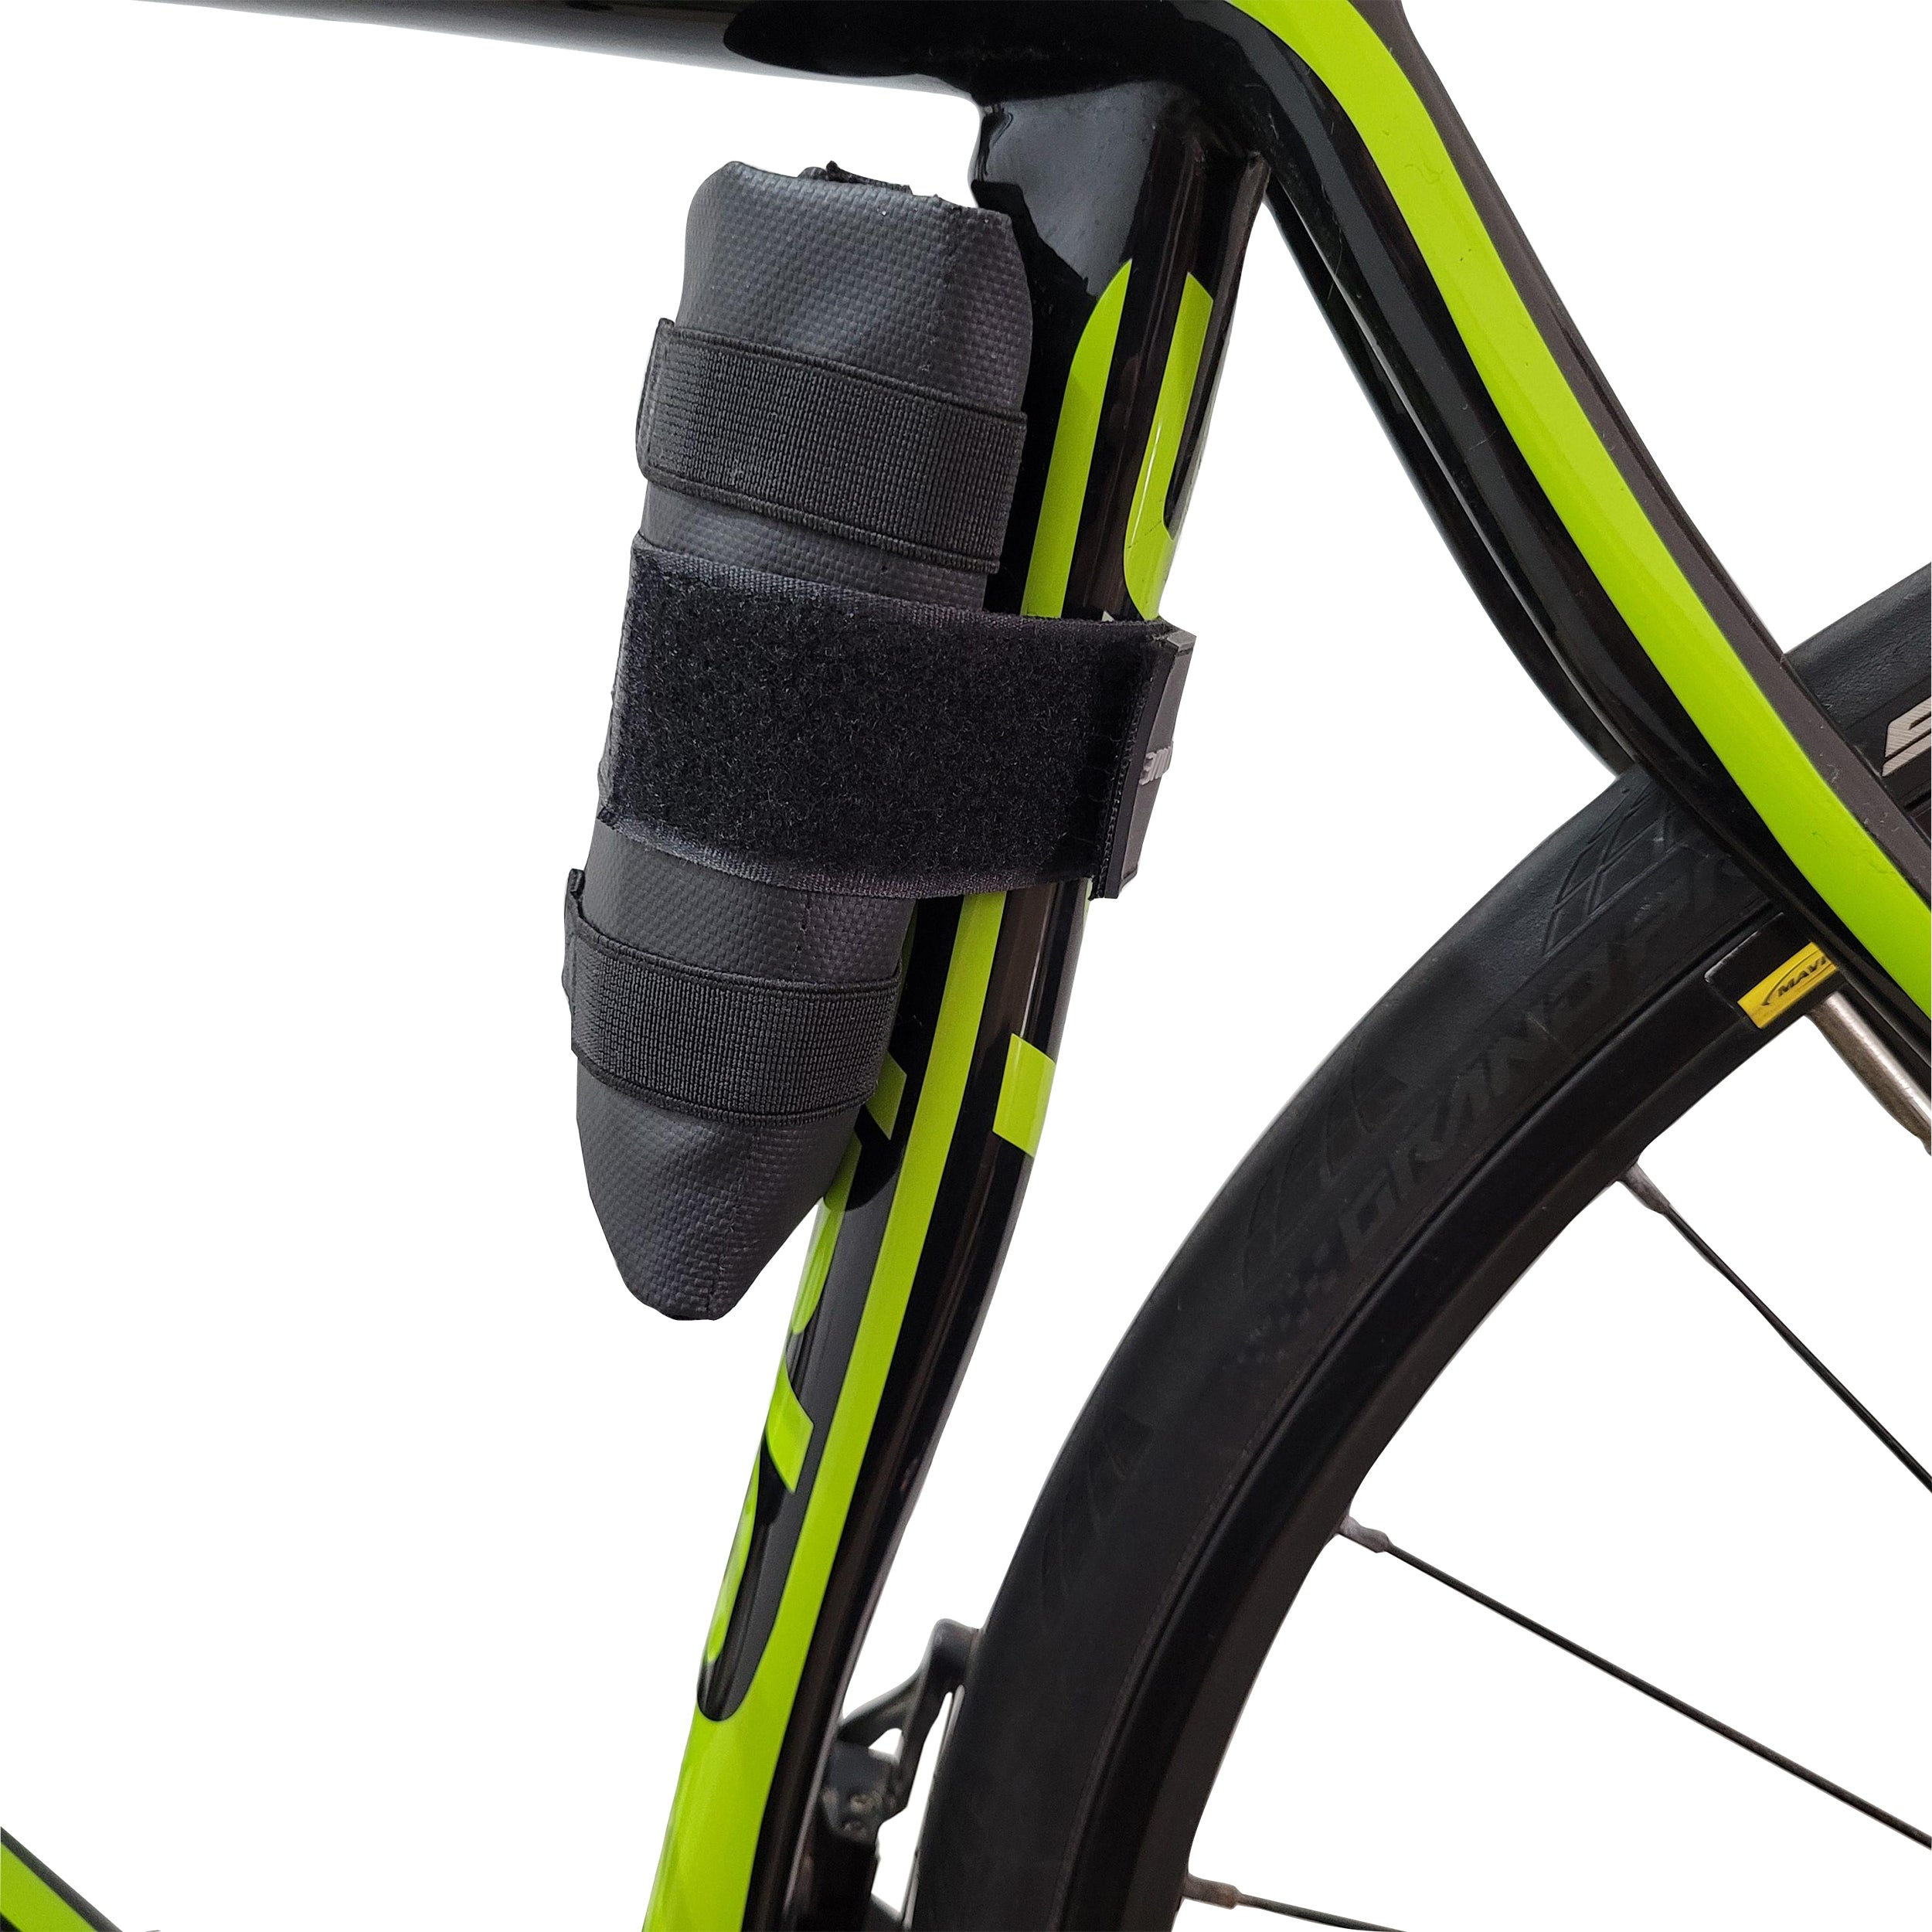 PACK2RIDE Blossom - Bolsa para sillín de bicicleta, resistente al agua,  tela Cordura duradera y soporte para kit de herramientas de bicicleta